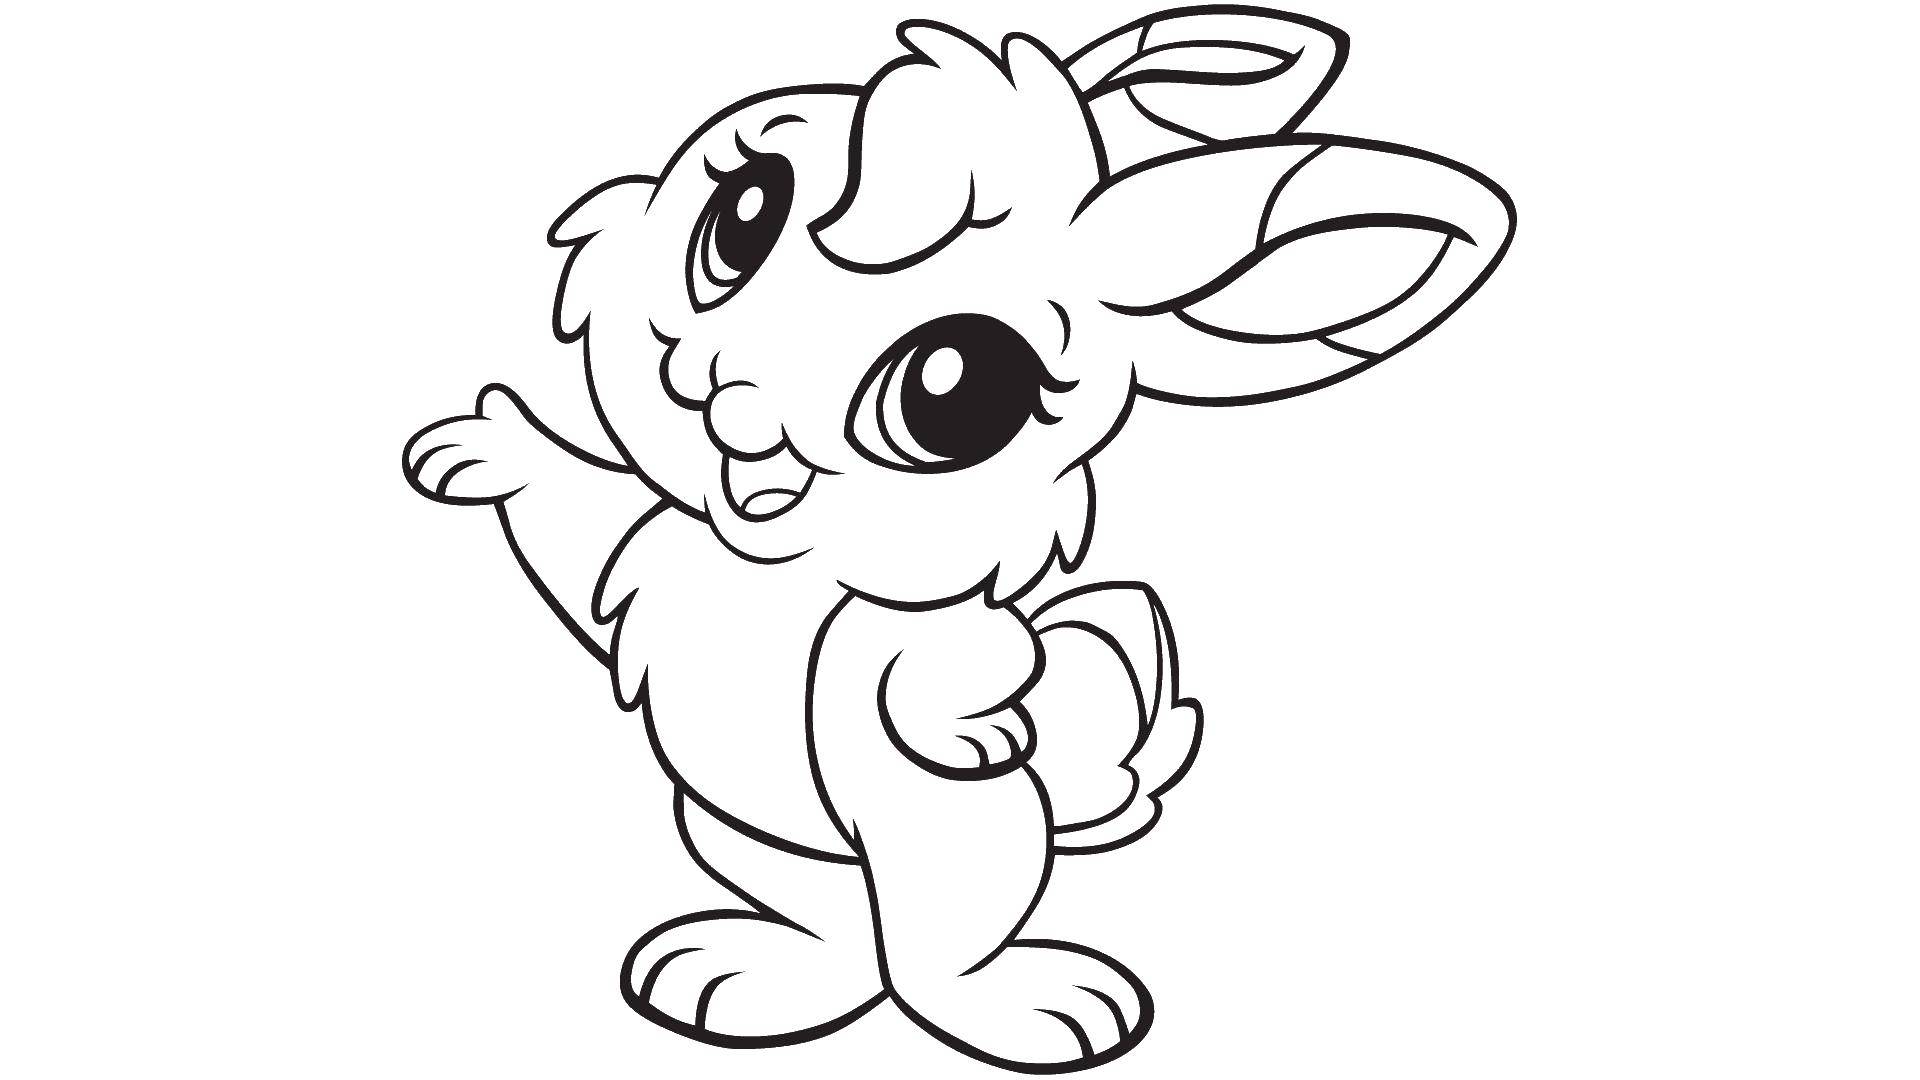 Coloring Cutie Bunny. Category Animals. Tags:  Animals, Bunny.